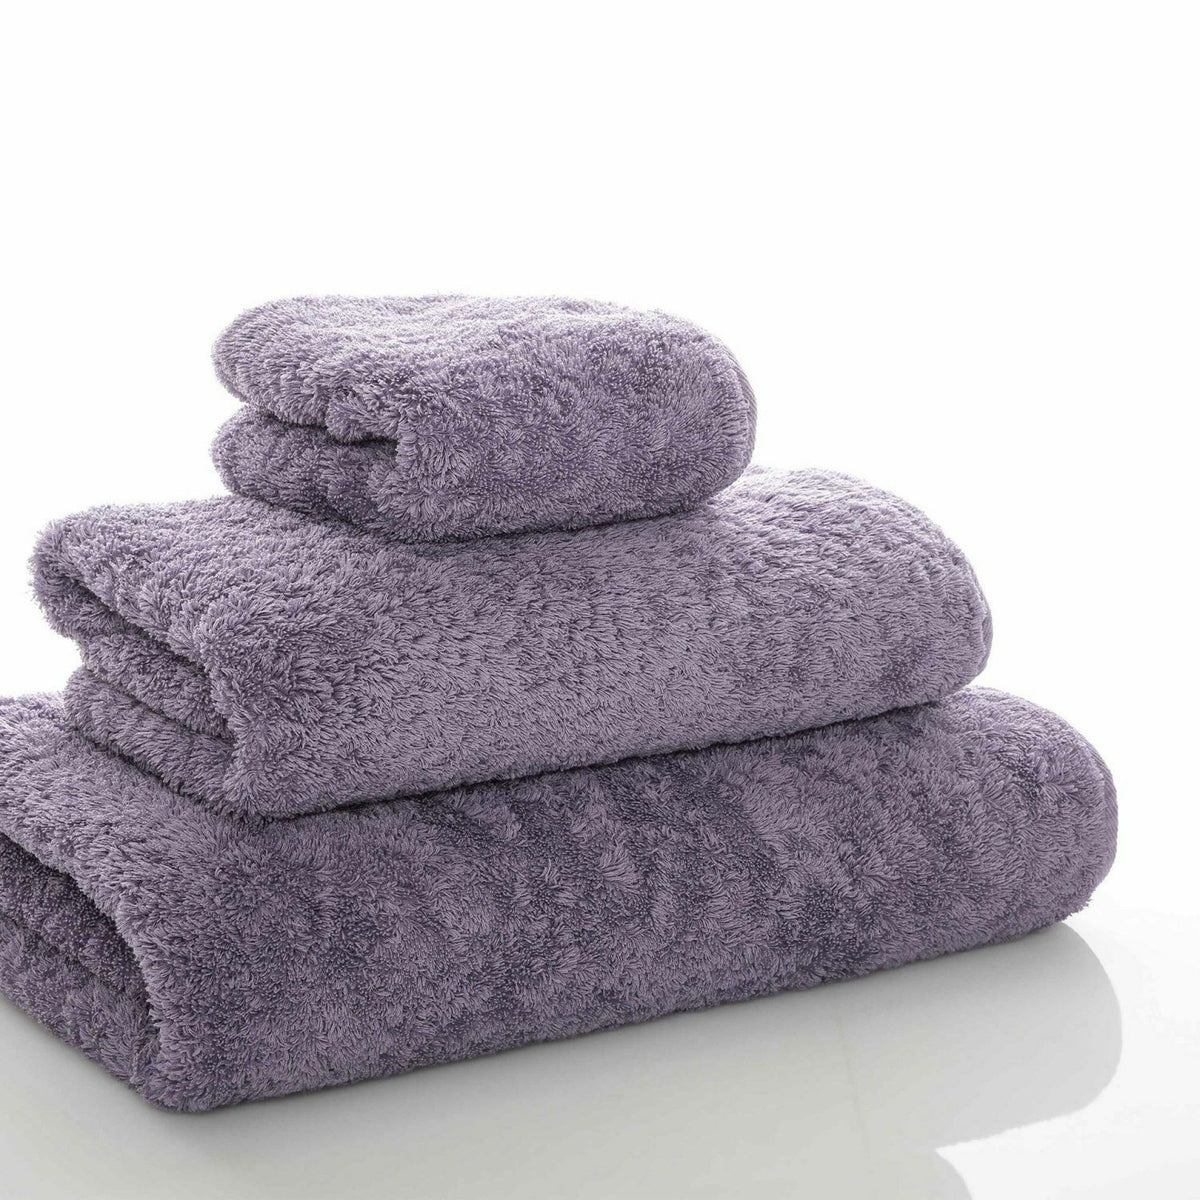 Graccioza Egoist Bath Towels Stack Lavander Fine Linens